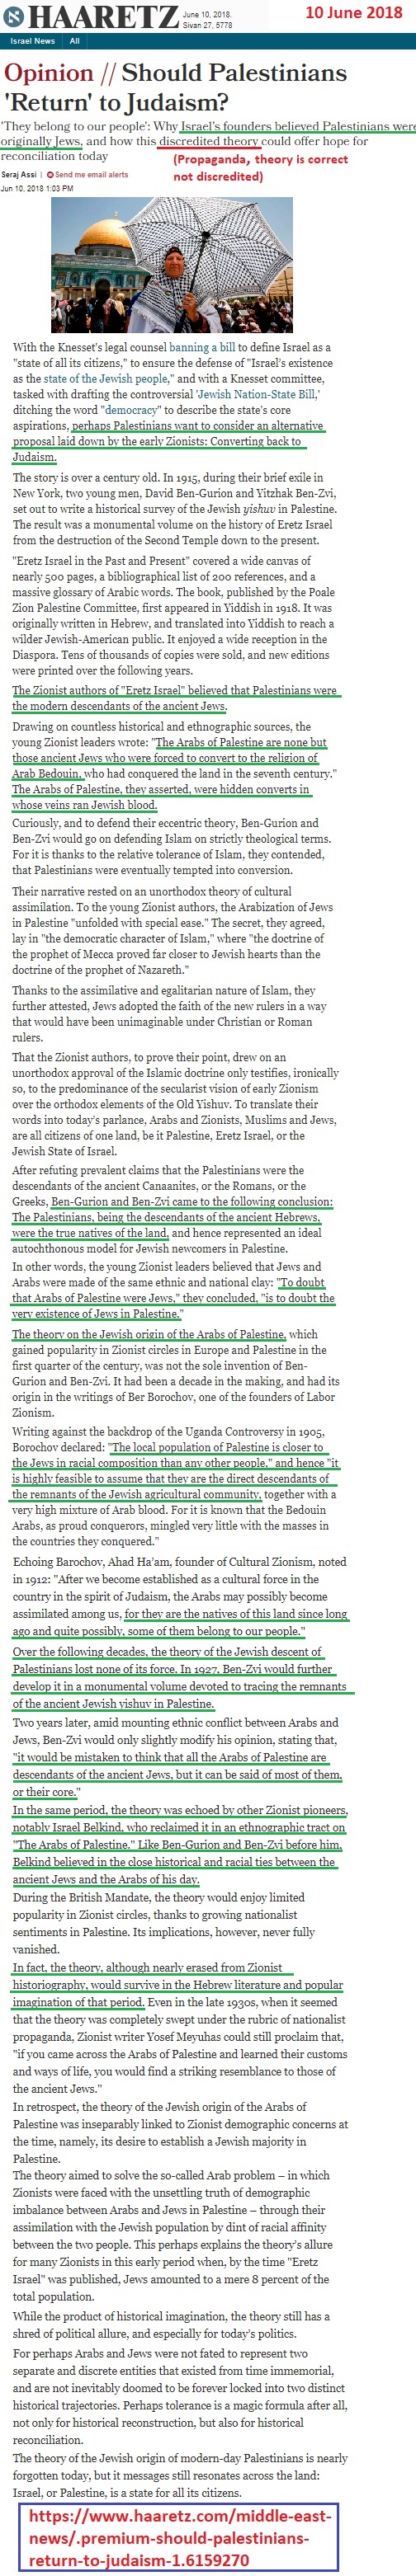 https://www.haaretz.com/middle-east-news/.premium-should-palestinians-return-to-judaism-1.6159270